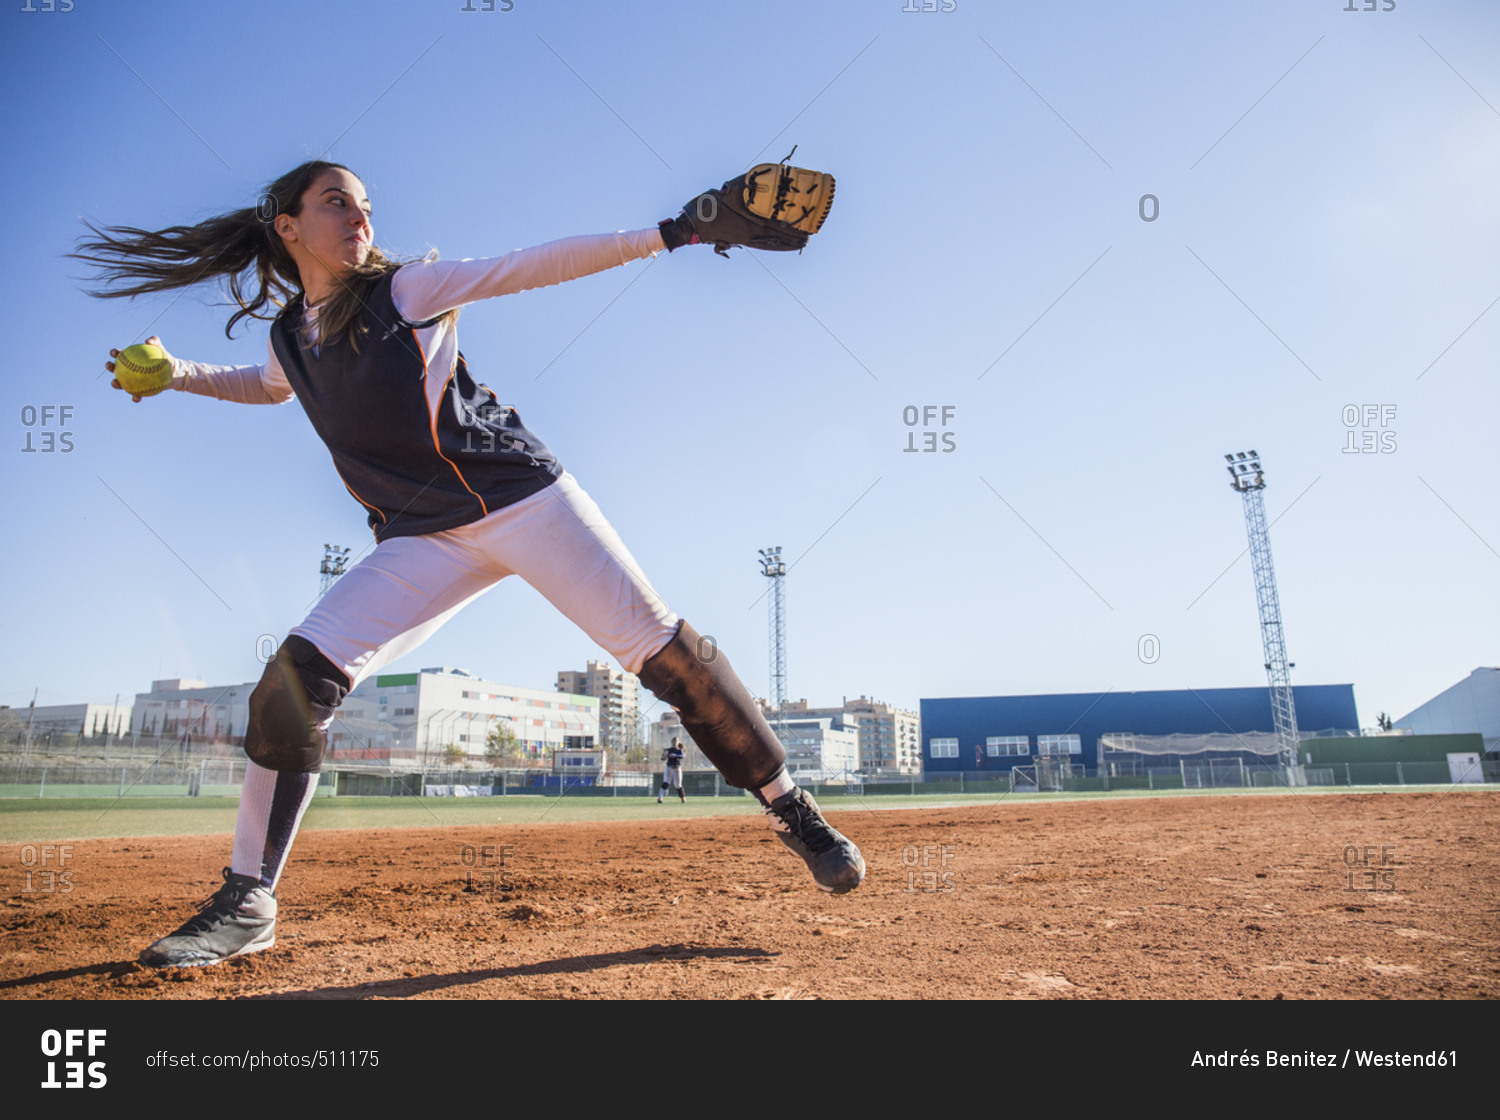 Female baseball player throwing the ball during a baseball game